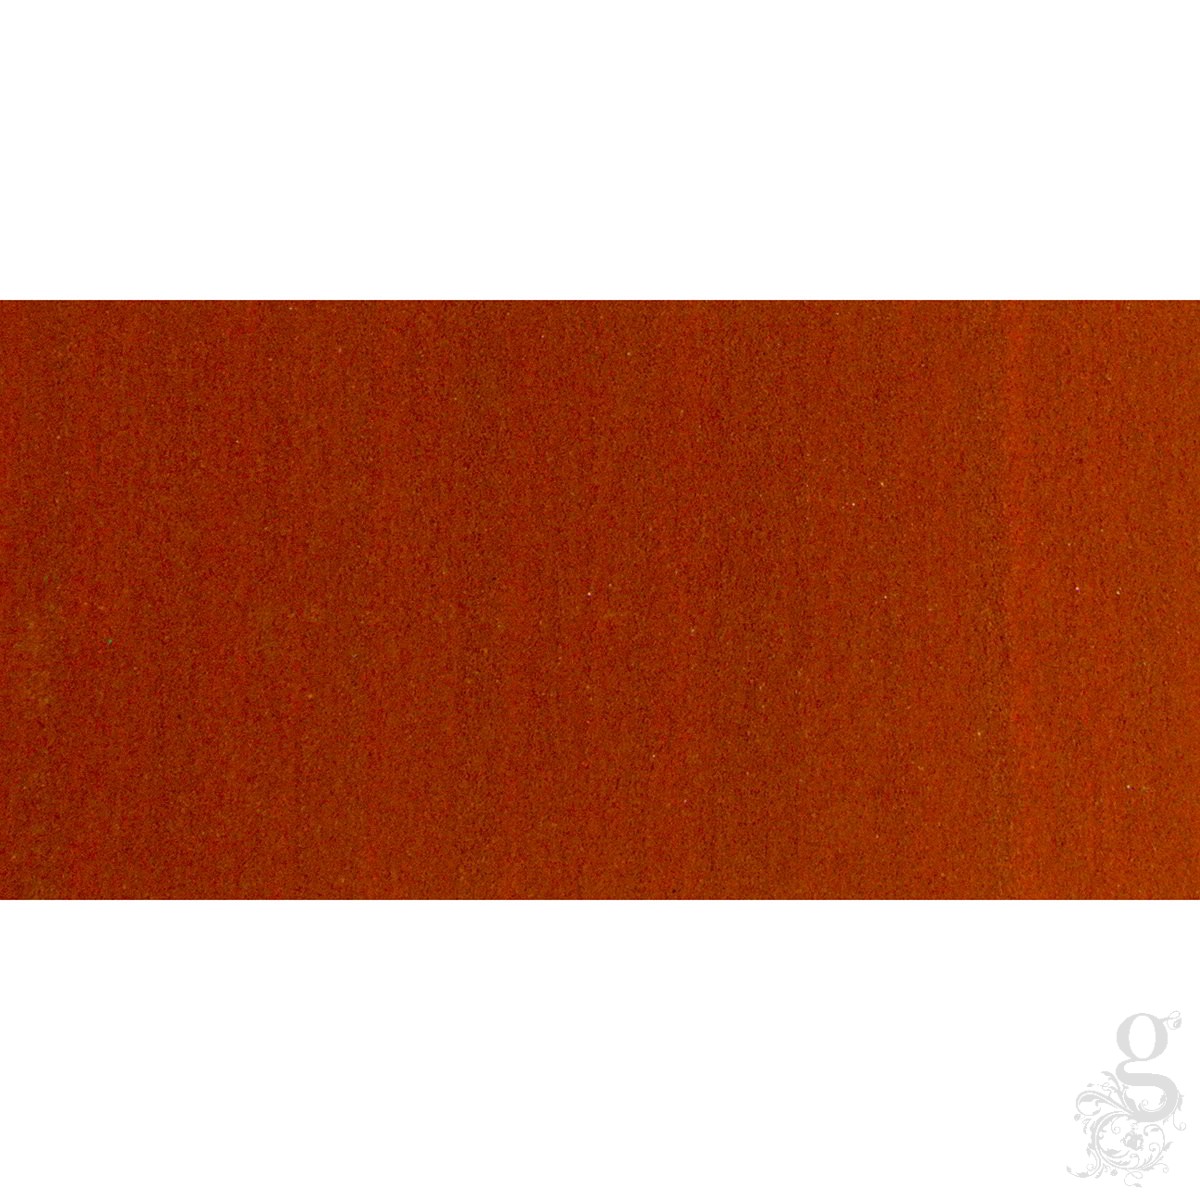 Dry Pigments - Burnt Sienna - 500g